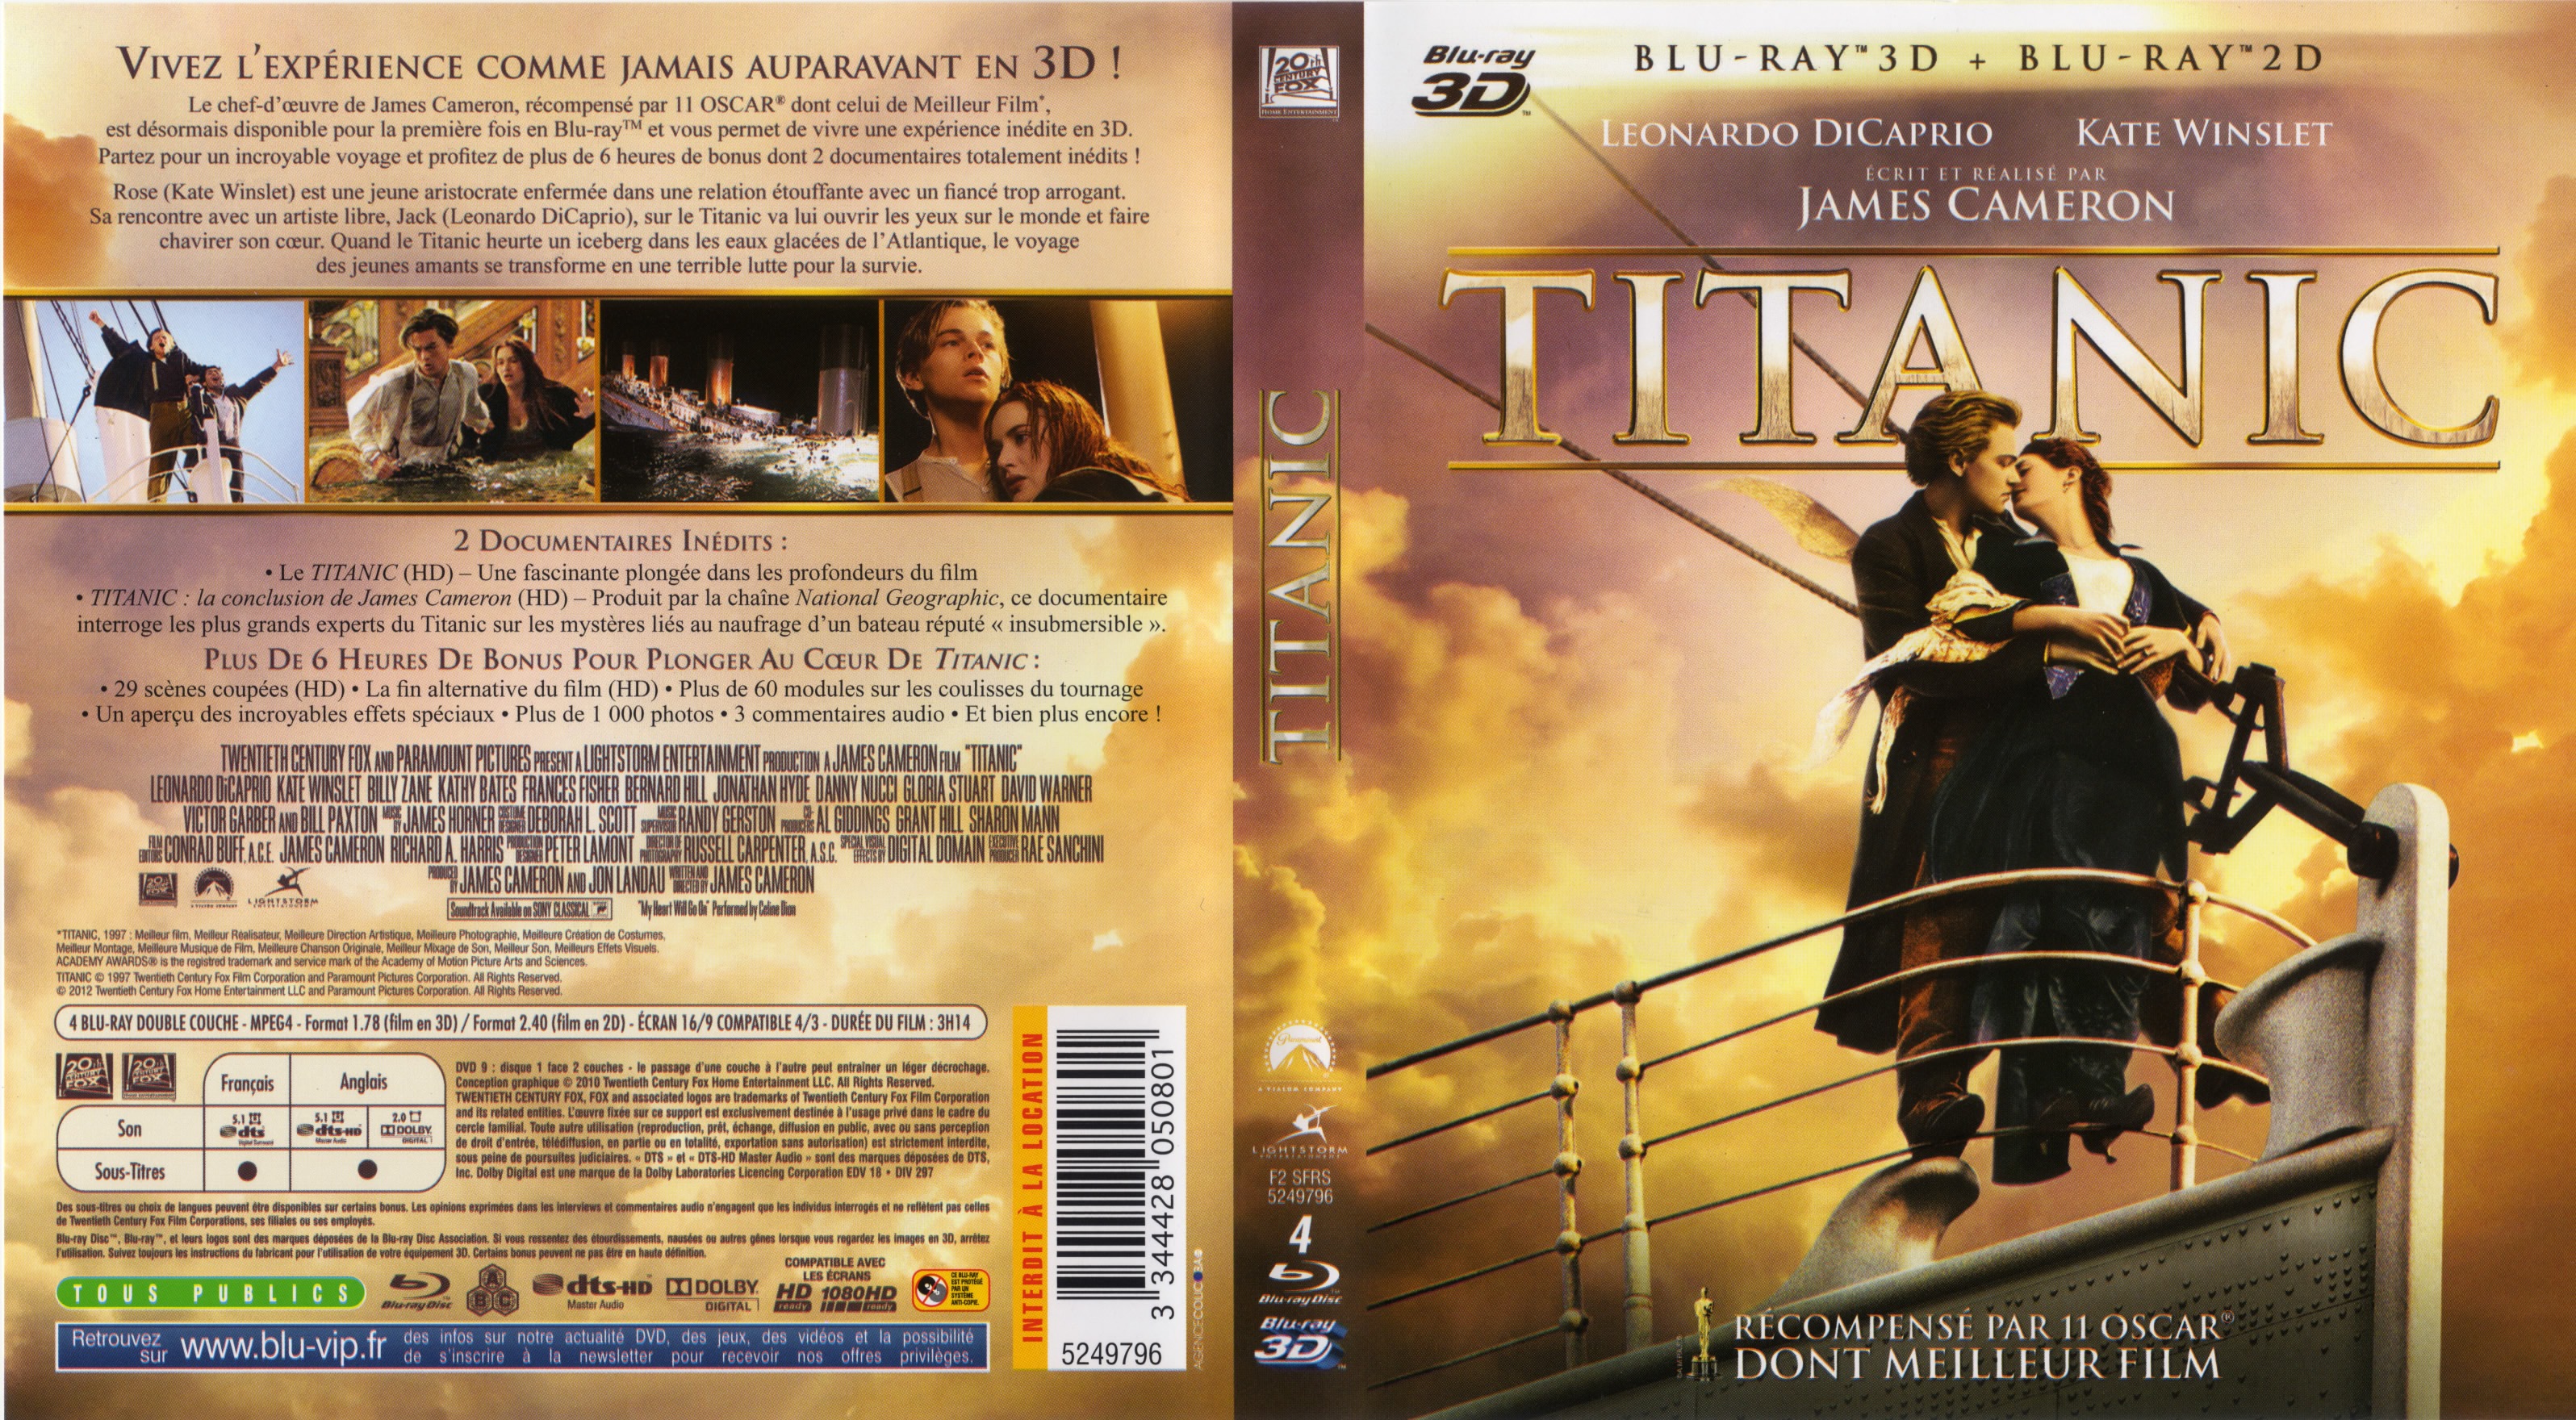 Jaquette DVD Titanic 3D (BLU RAY) v2